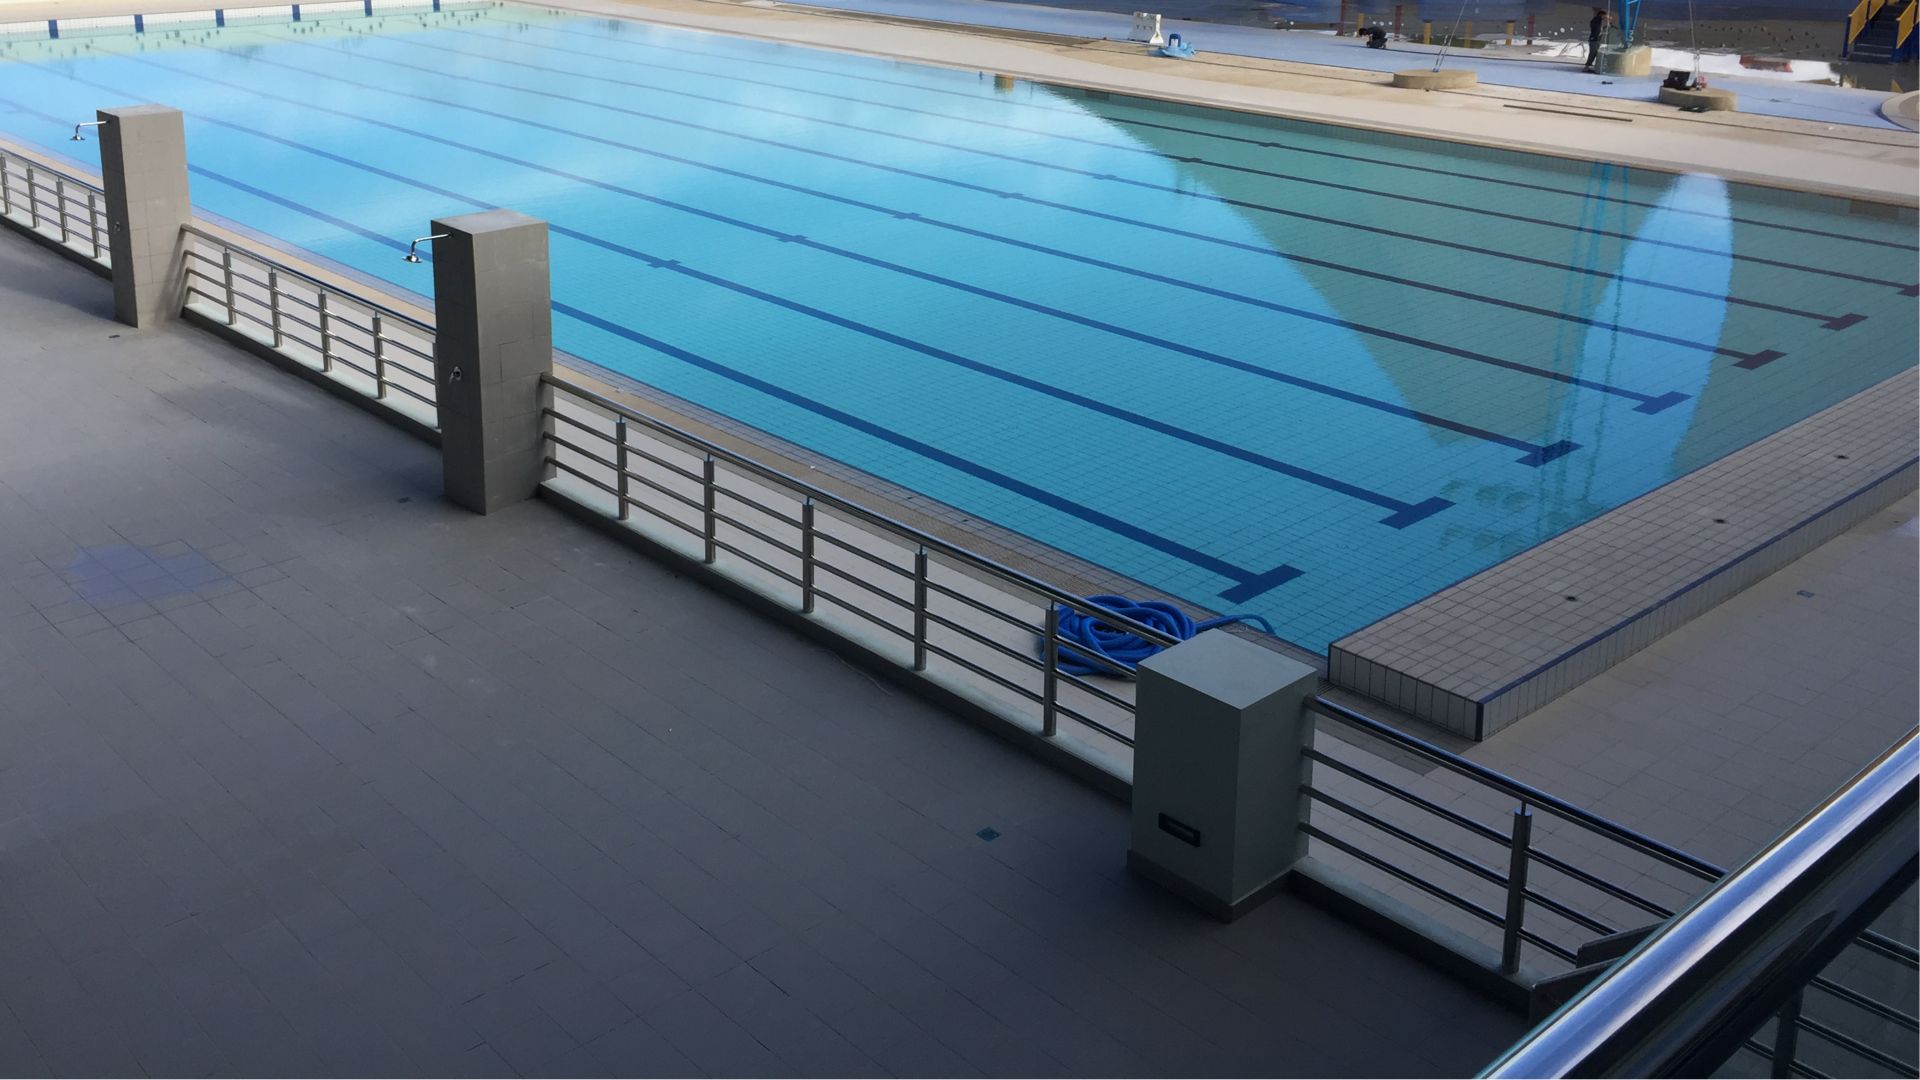 Swimming pool at Pandelela Rinong Aquatics Centre, built with Sika waterproofing products.